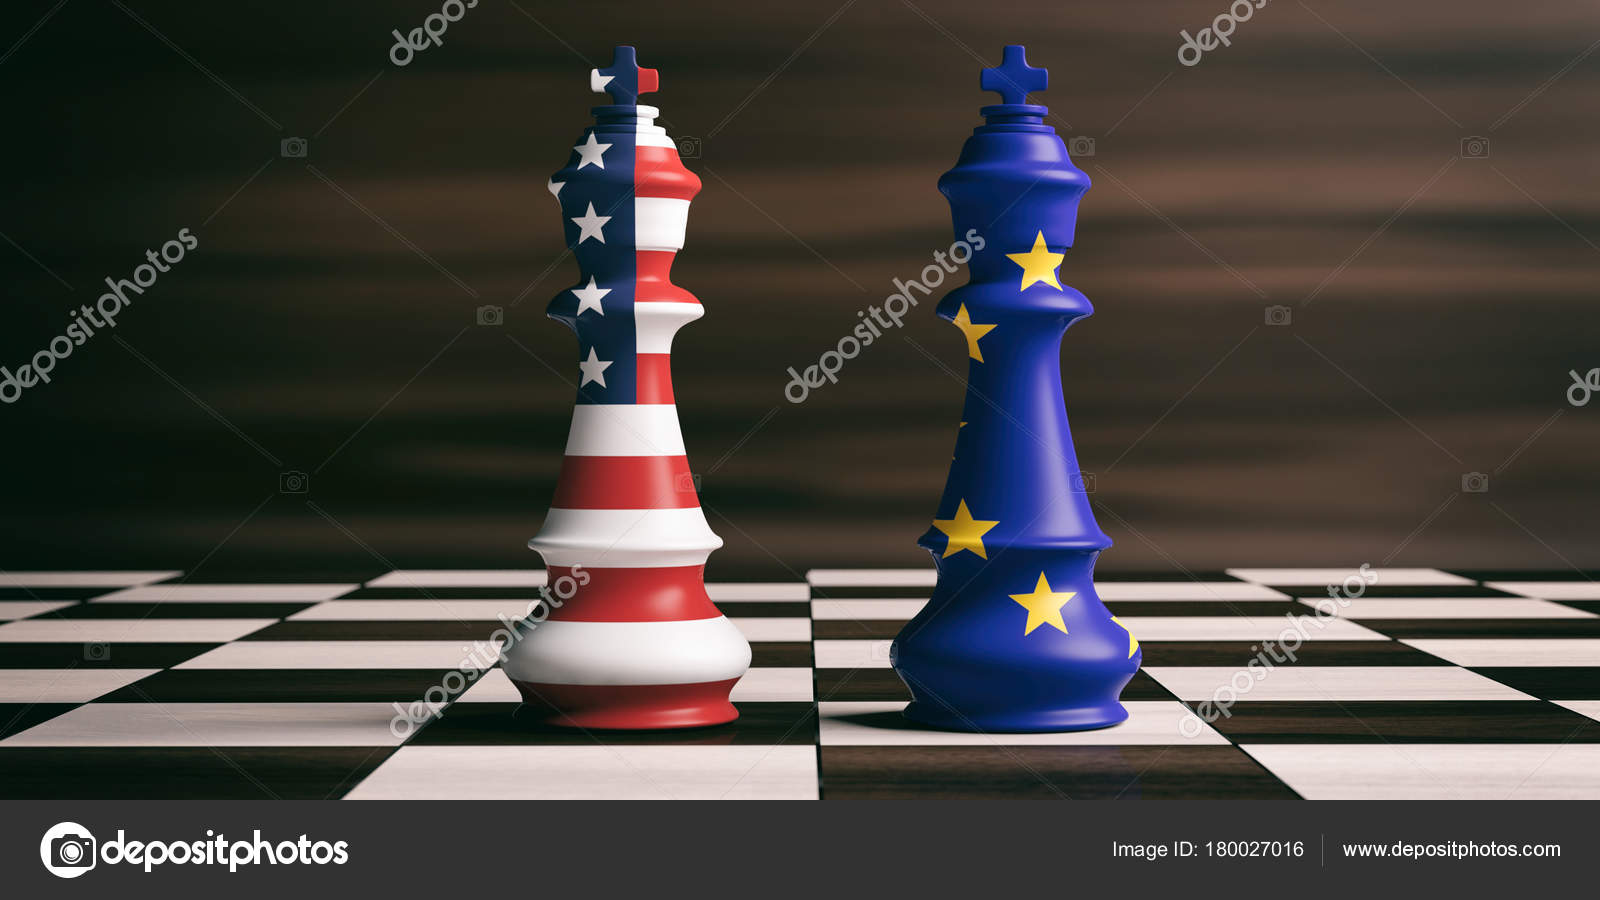 EU Chess King 3D Render Of Chess King With European Union Flag